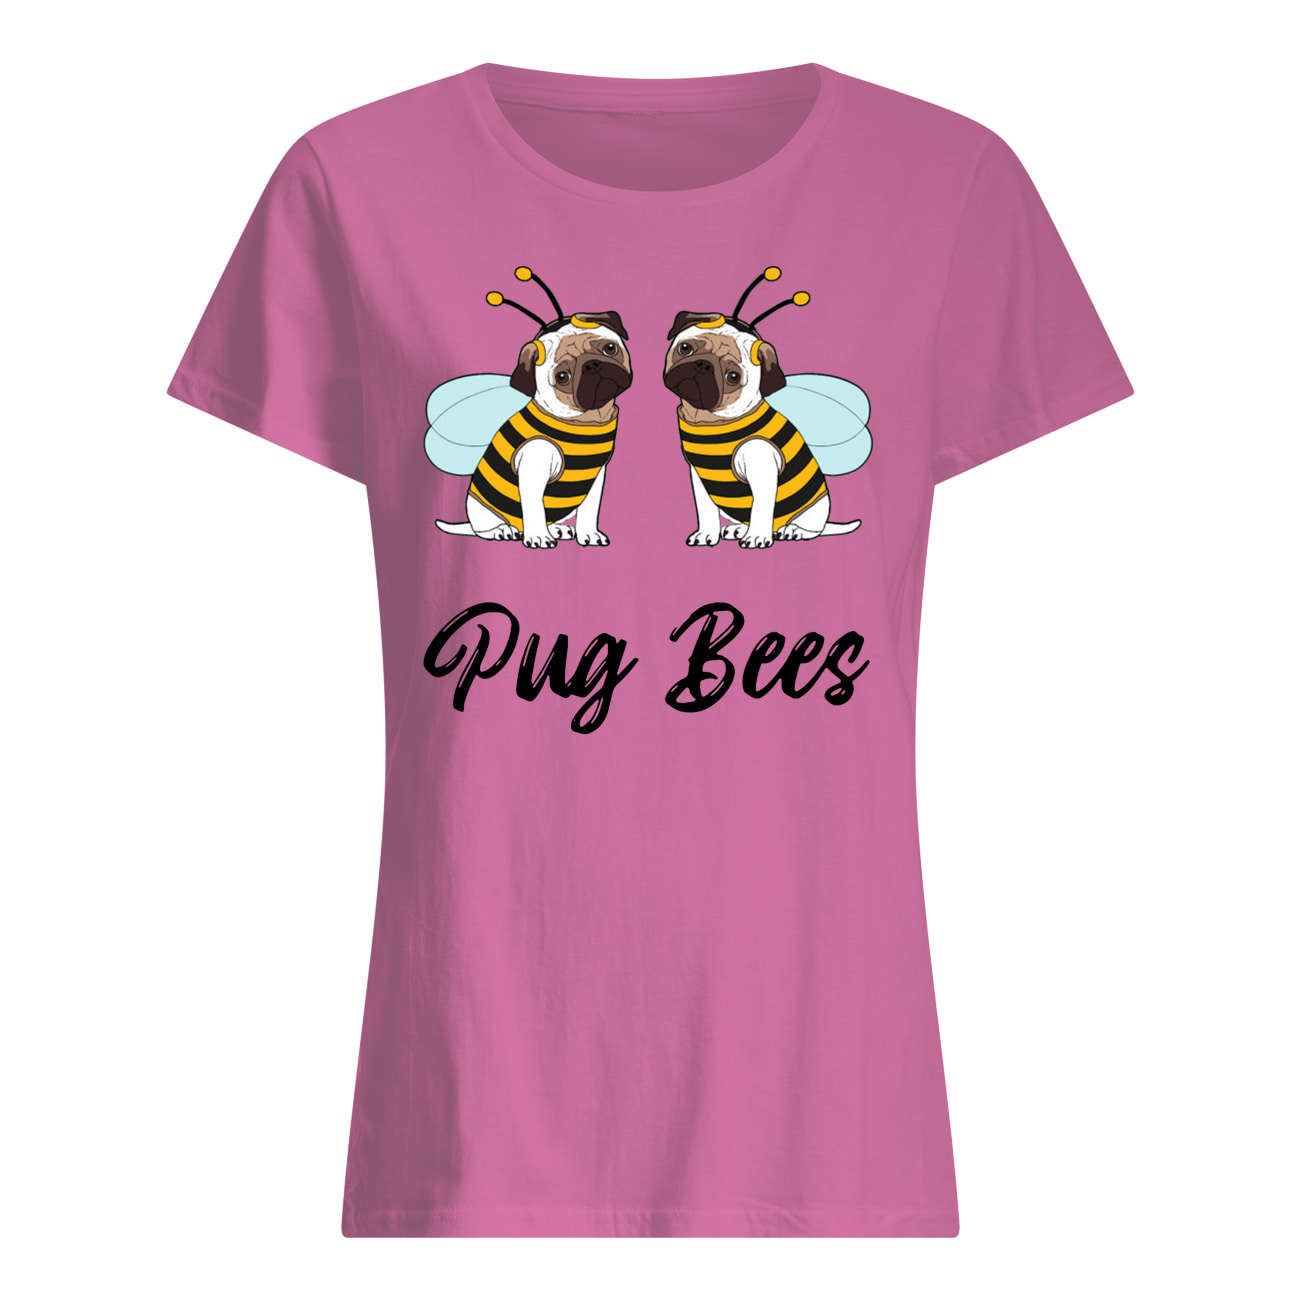 Pug bees couples womens shirt